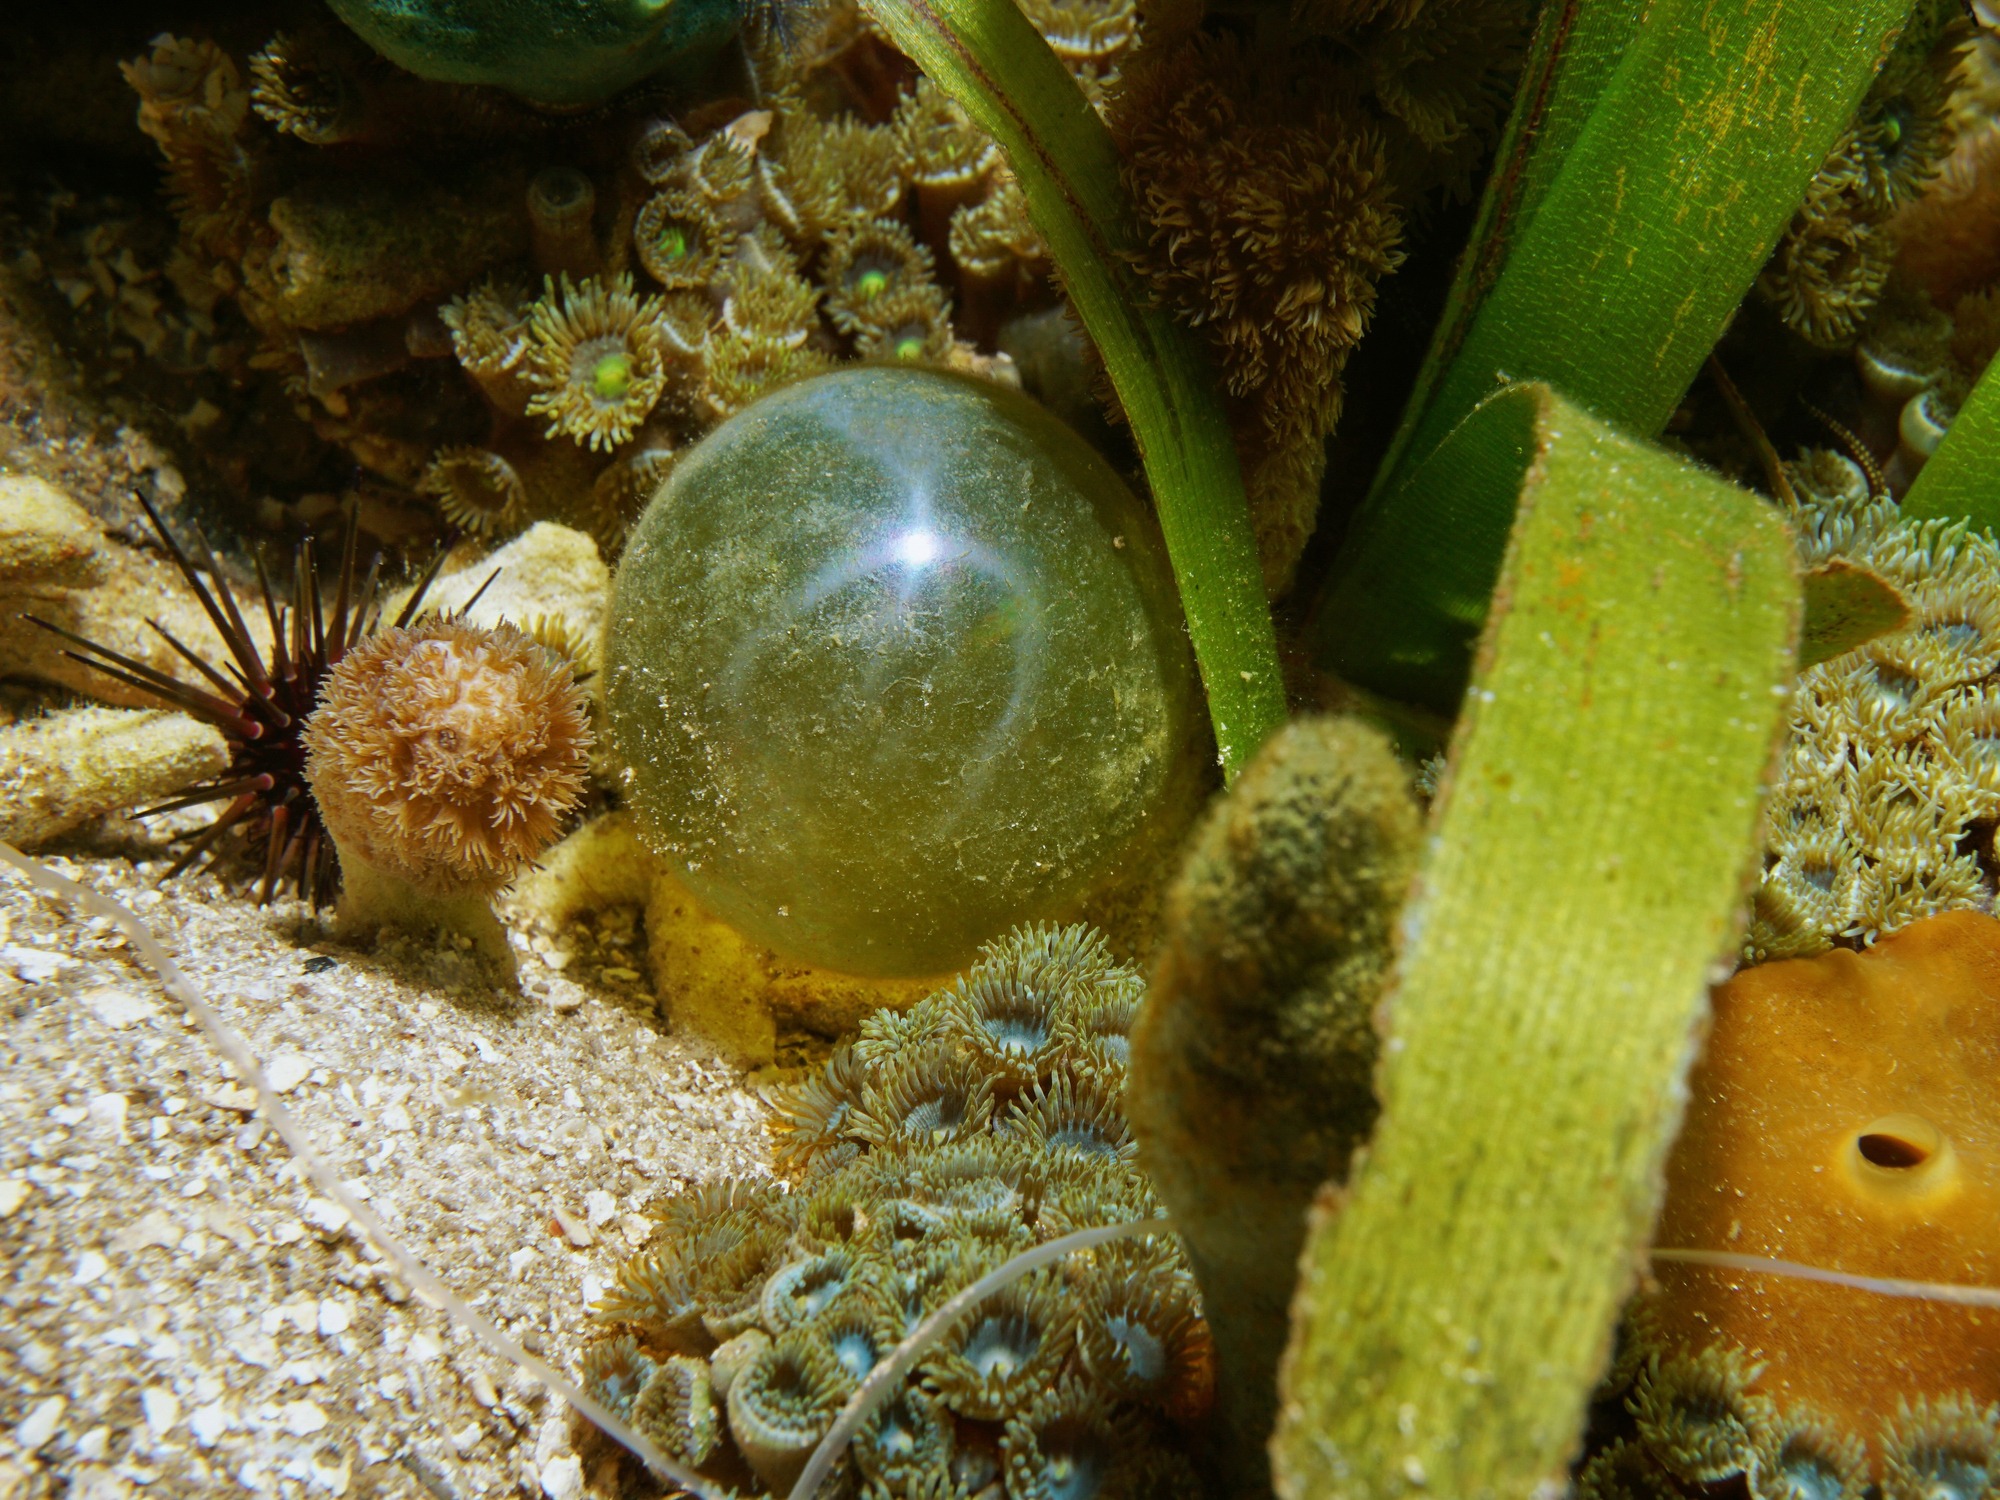 Translucent, speckled orb nestled among seafloor vegetation with marine life